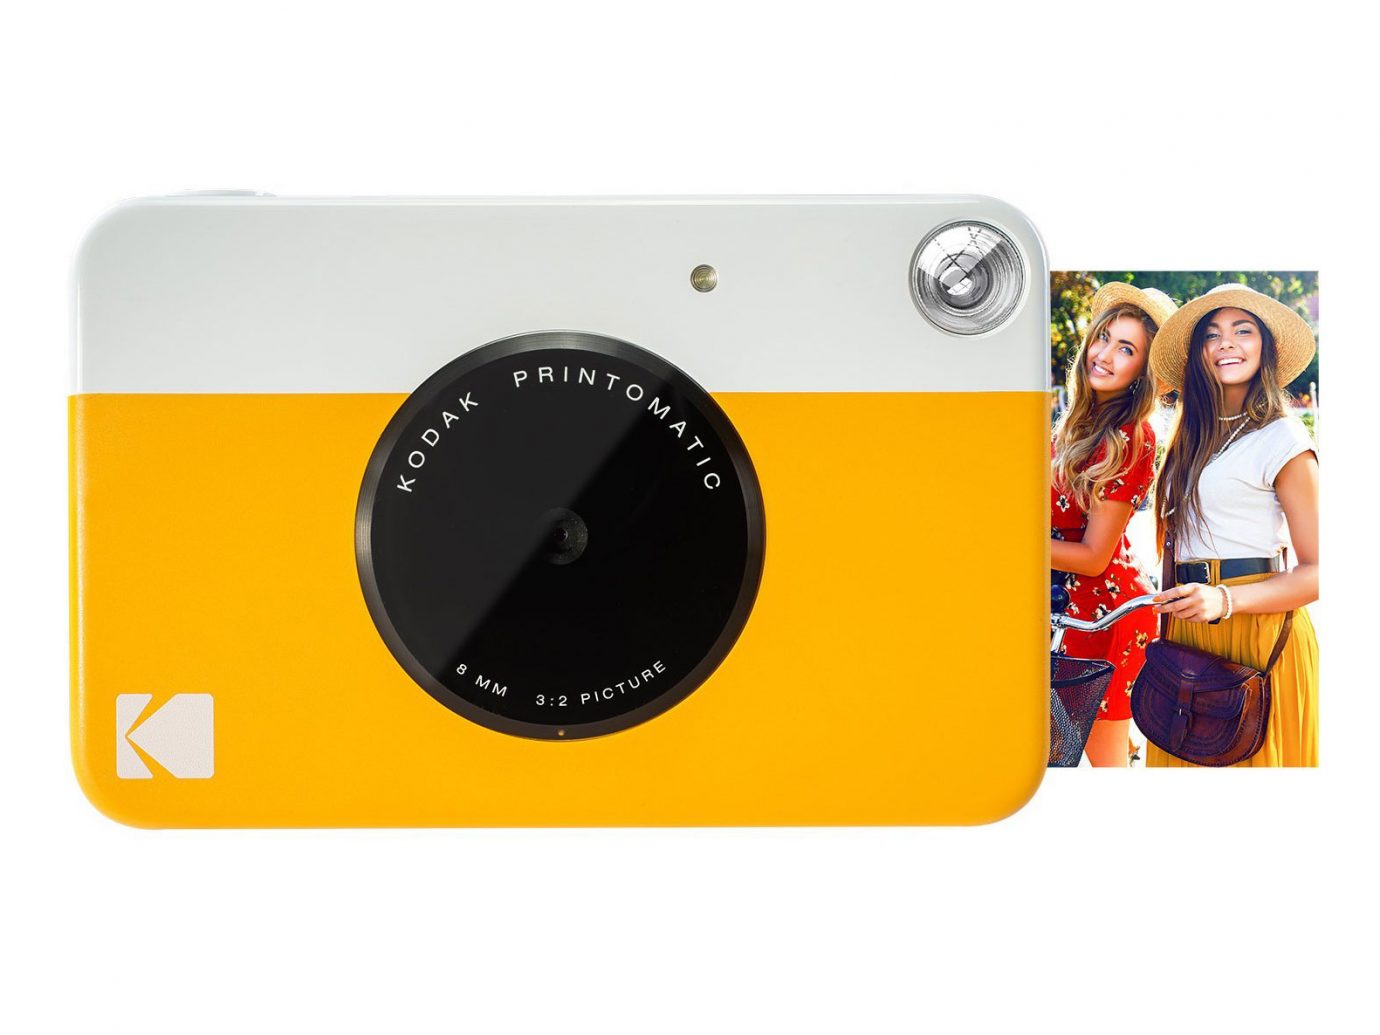 Kodak Printomatic Digital Instant Camera